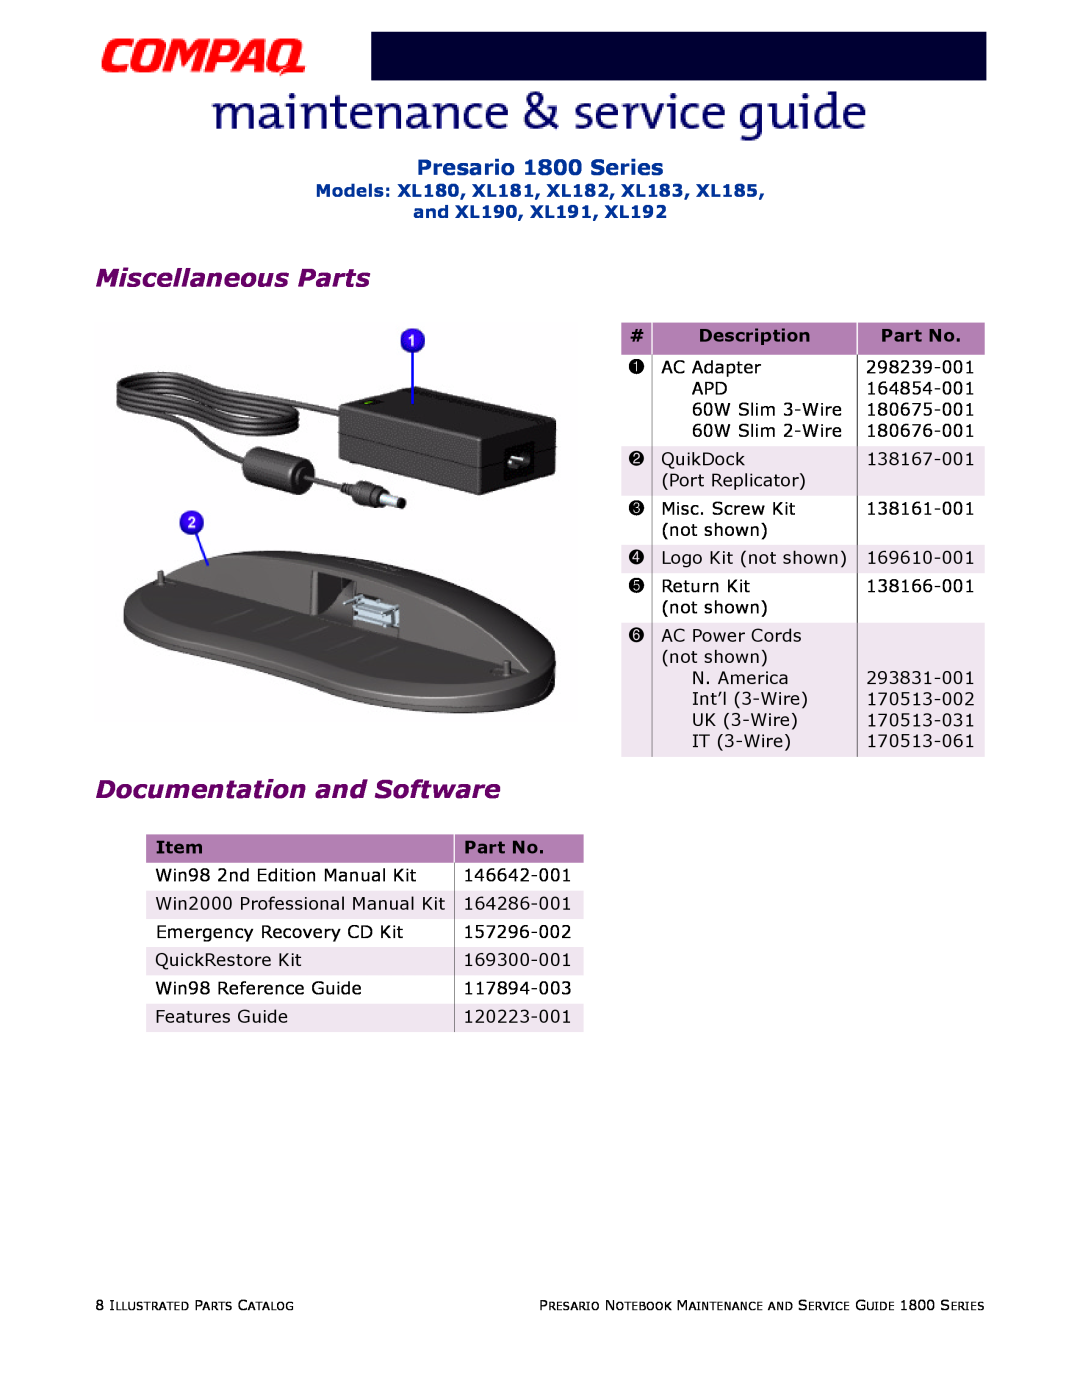 Compaq XL181, XL190, XL180, XL191, XL192 Miscellaneous Parts, Documentation and Software, Presario 1800 Series, Description 